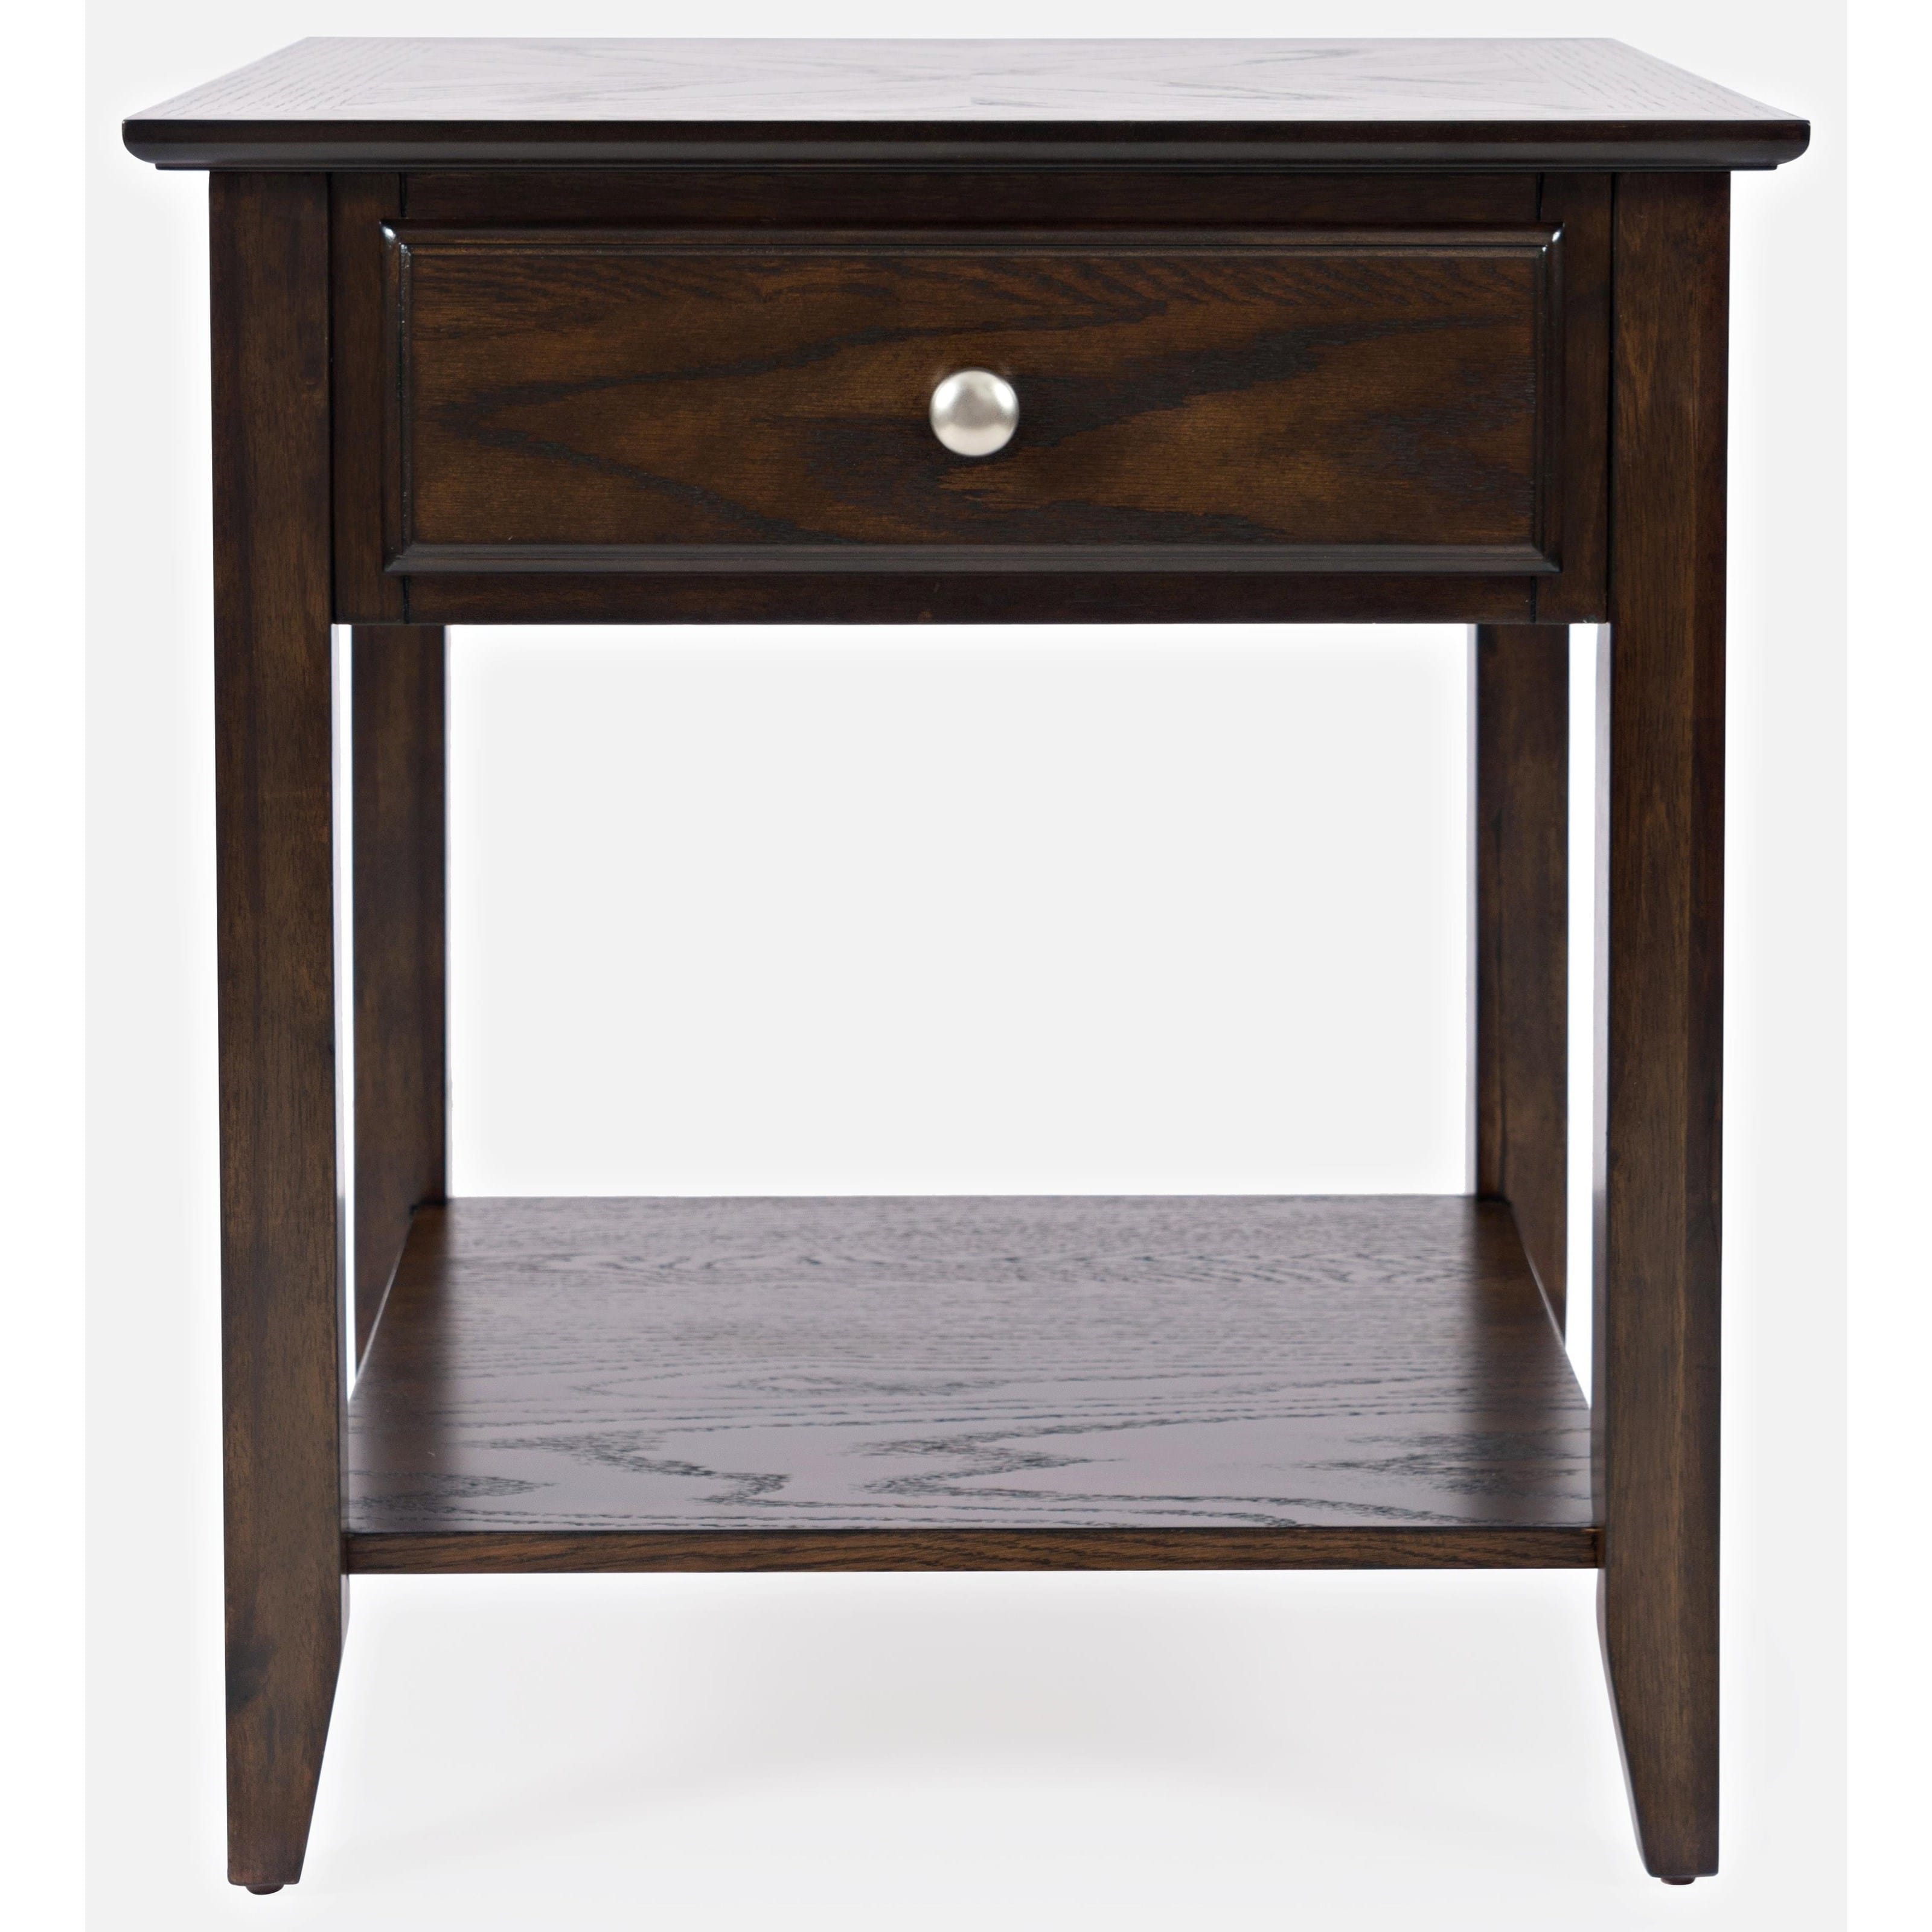 Espresso Dark Brown Wood End Table w/Drawer & Shelf by Jofran Furniture